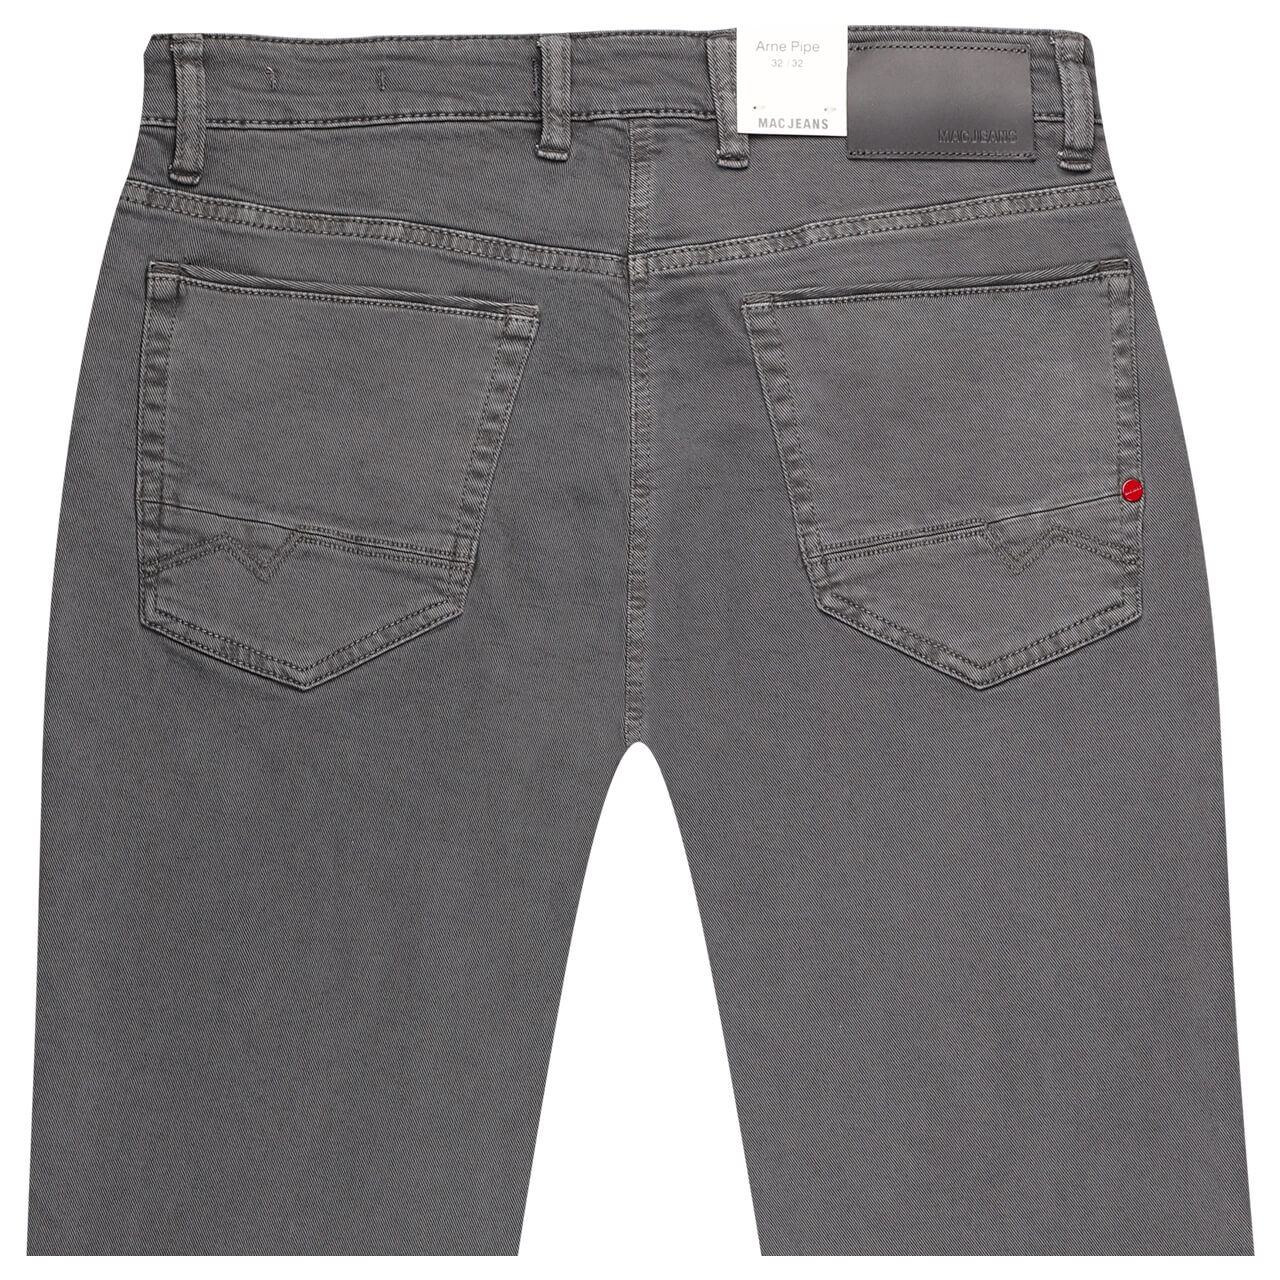 MAC Arne Pipe Jeans dark grey